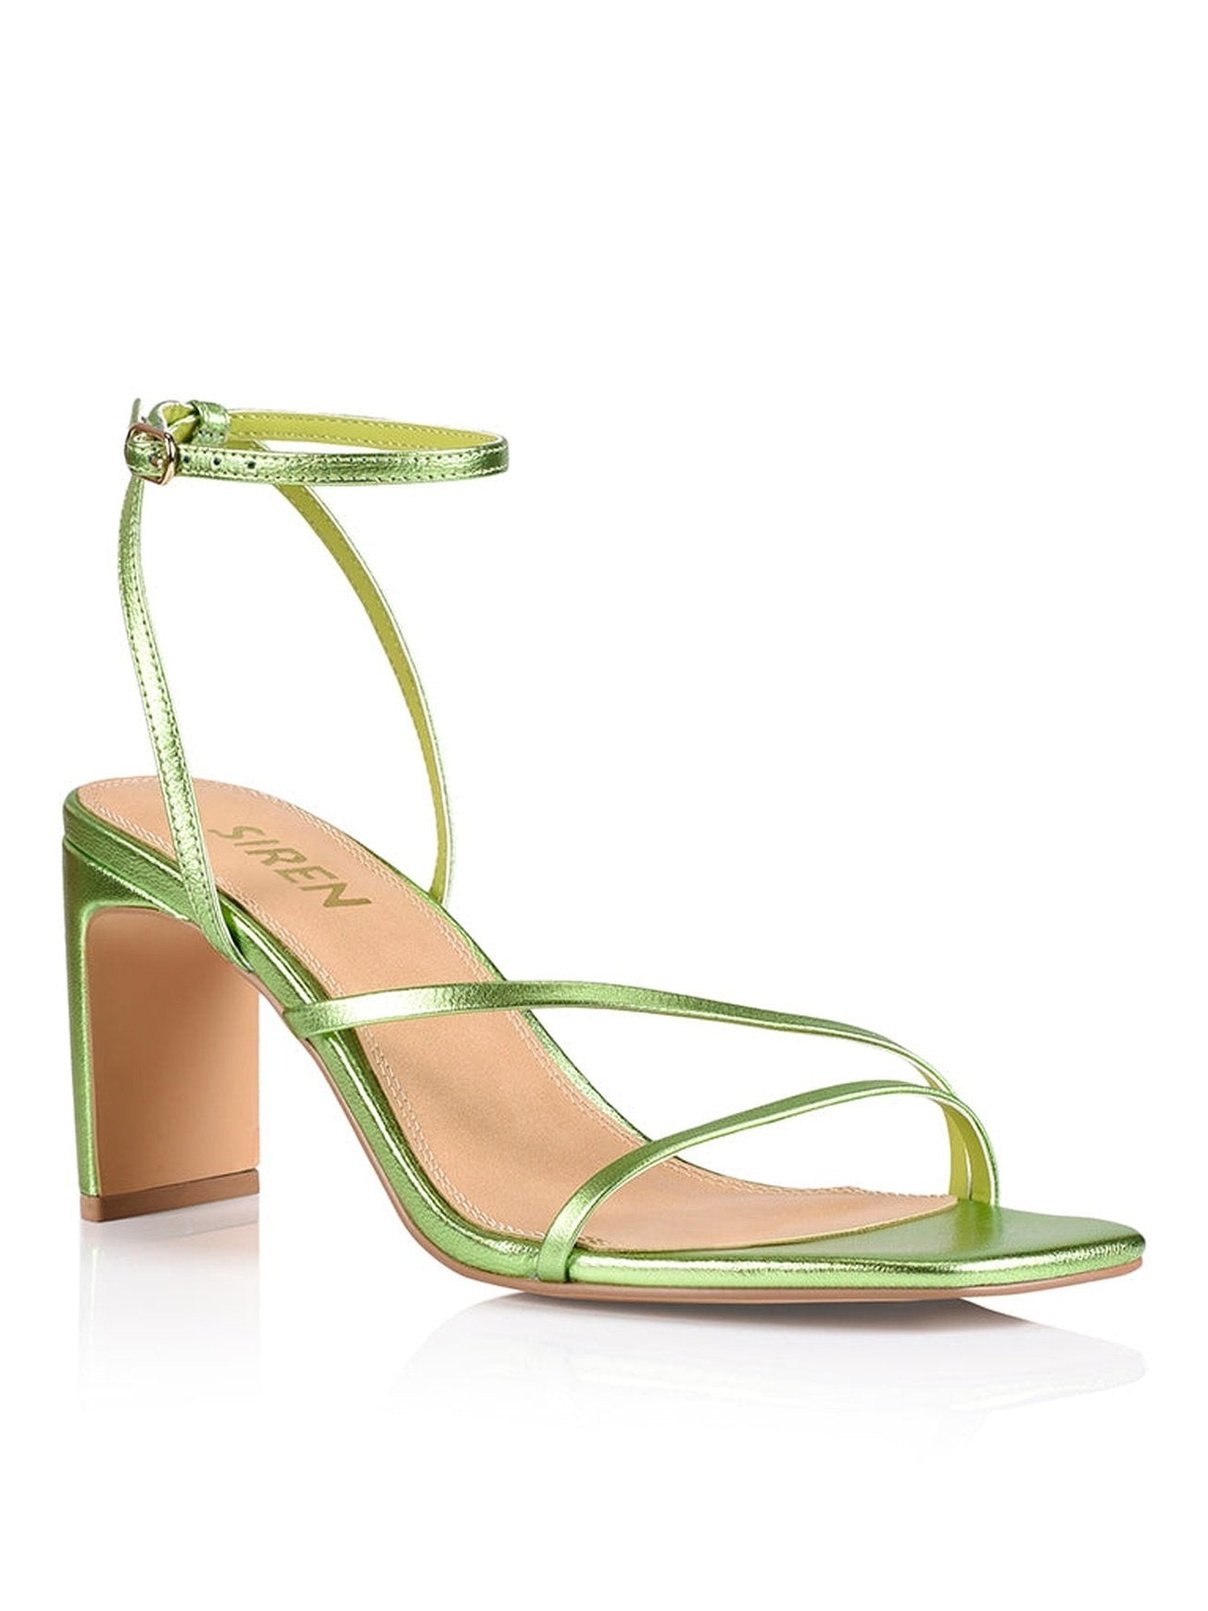 Kandice Block Heel Sandals - Lime Green Metallic Leather